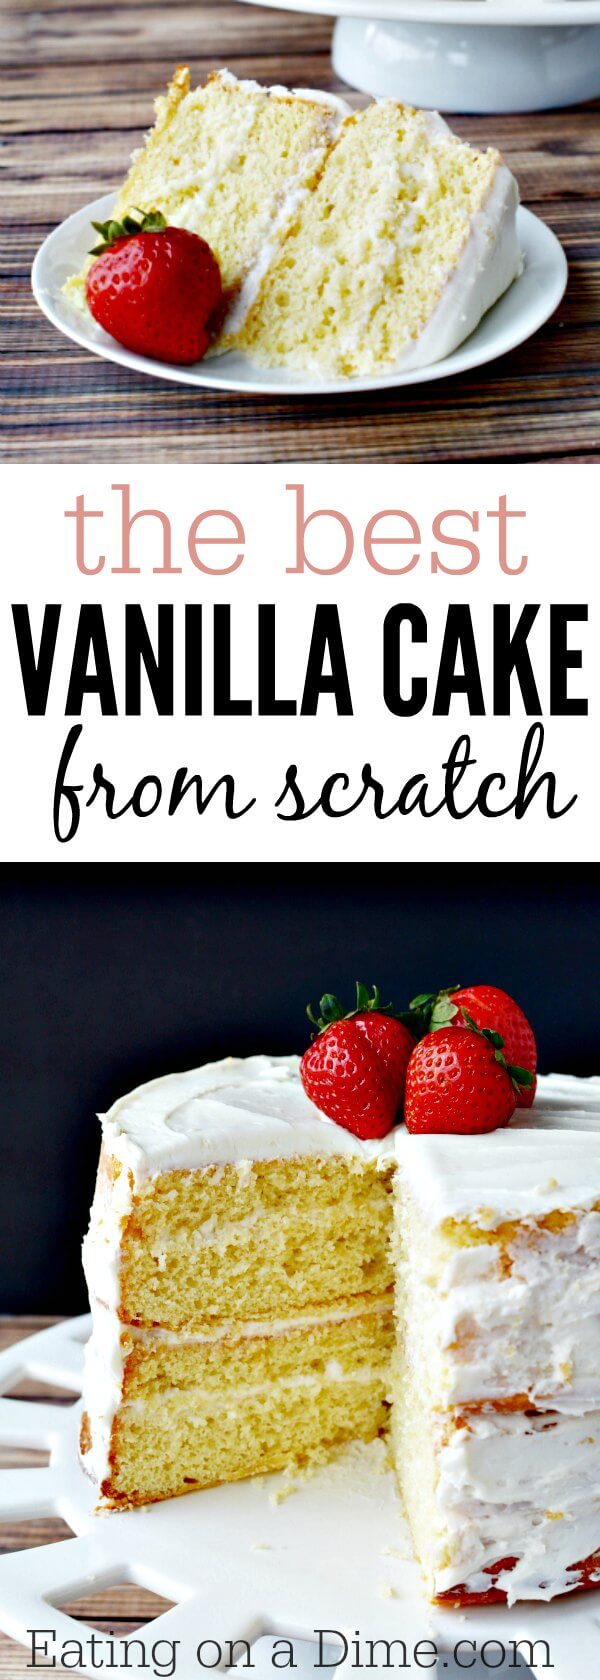 Vanilla cake from scratch